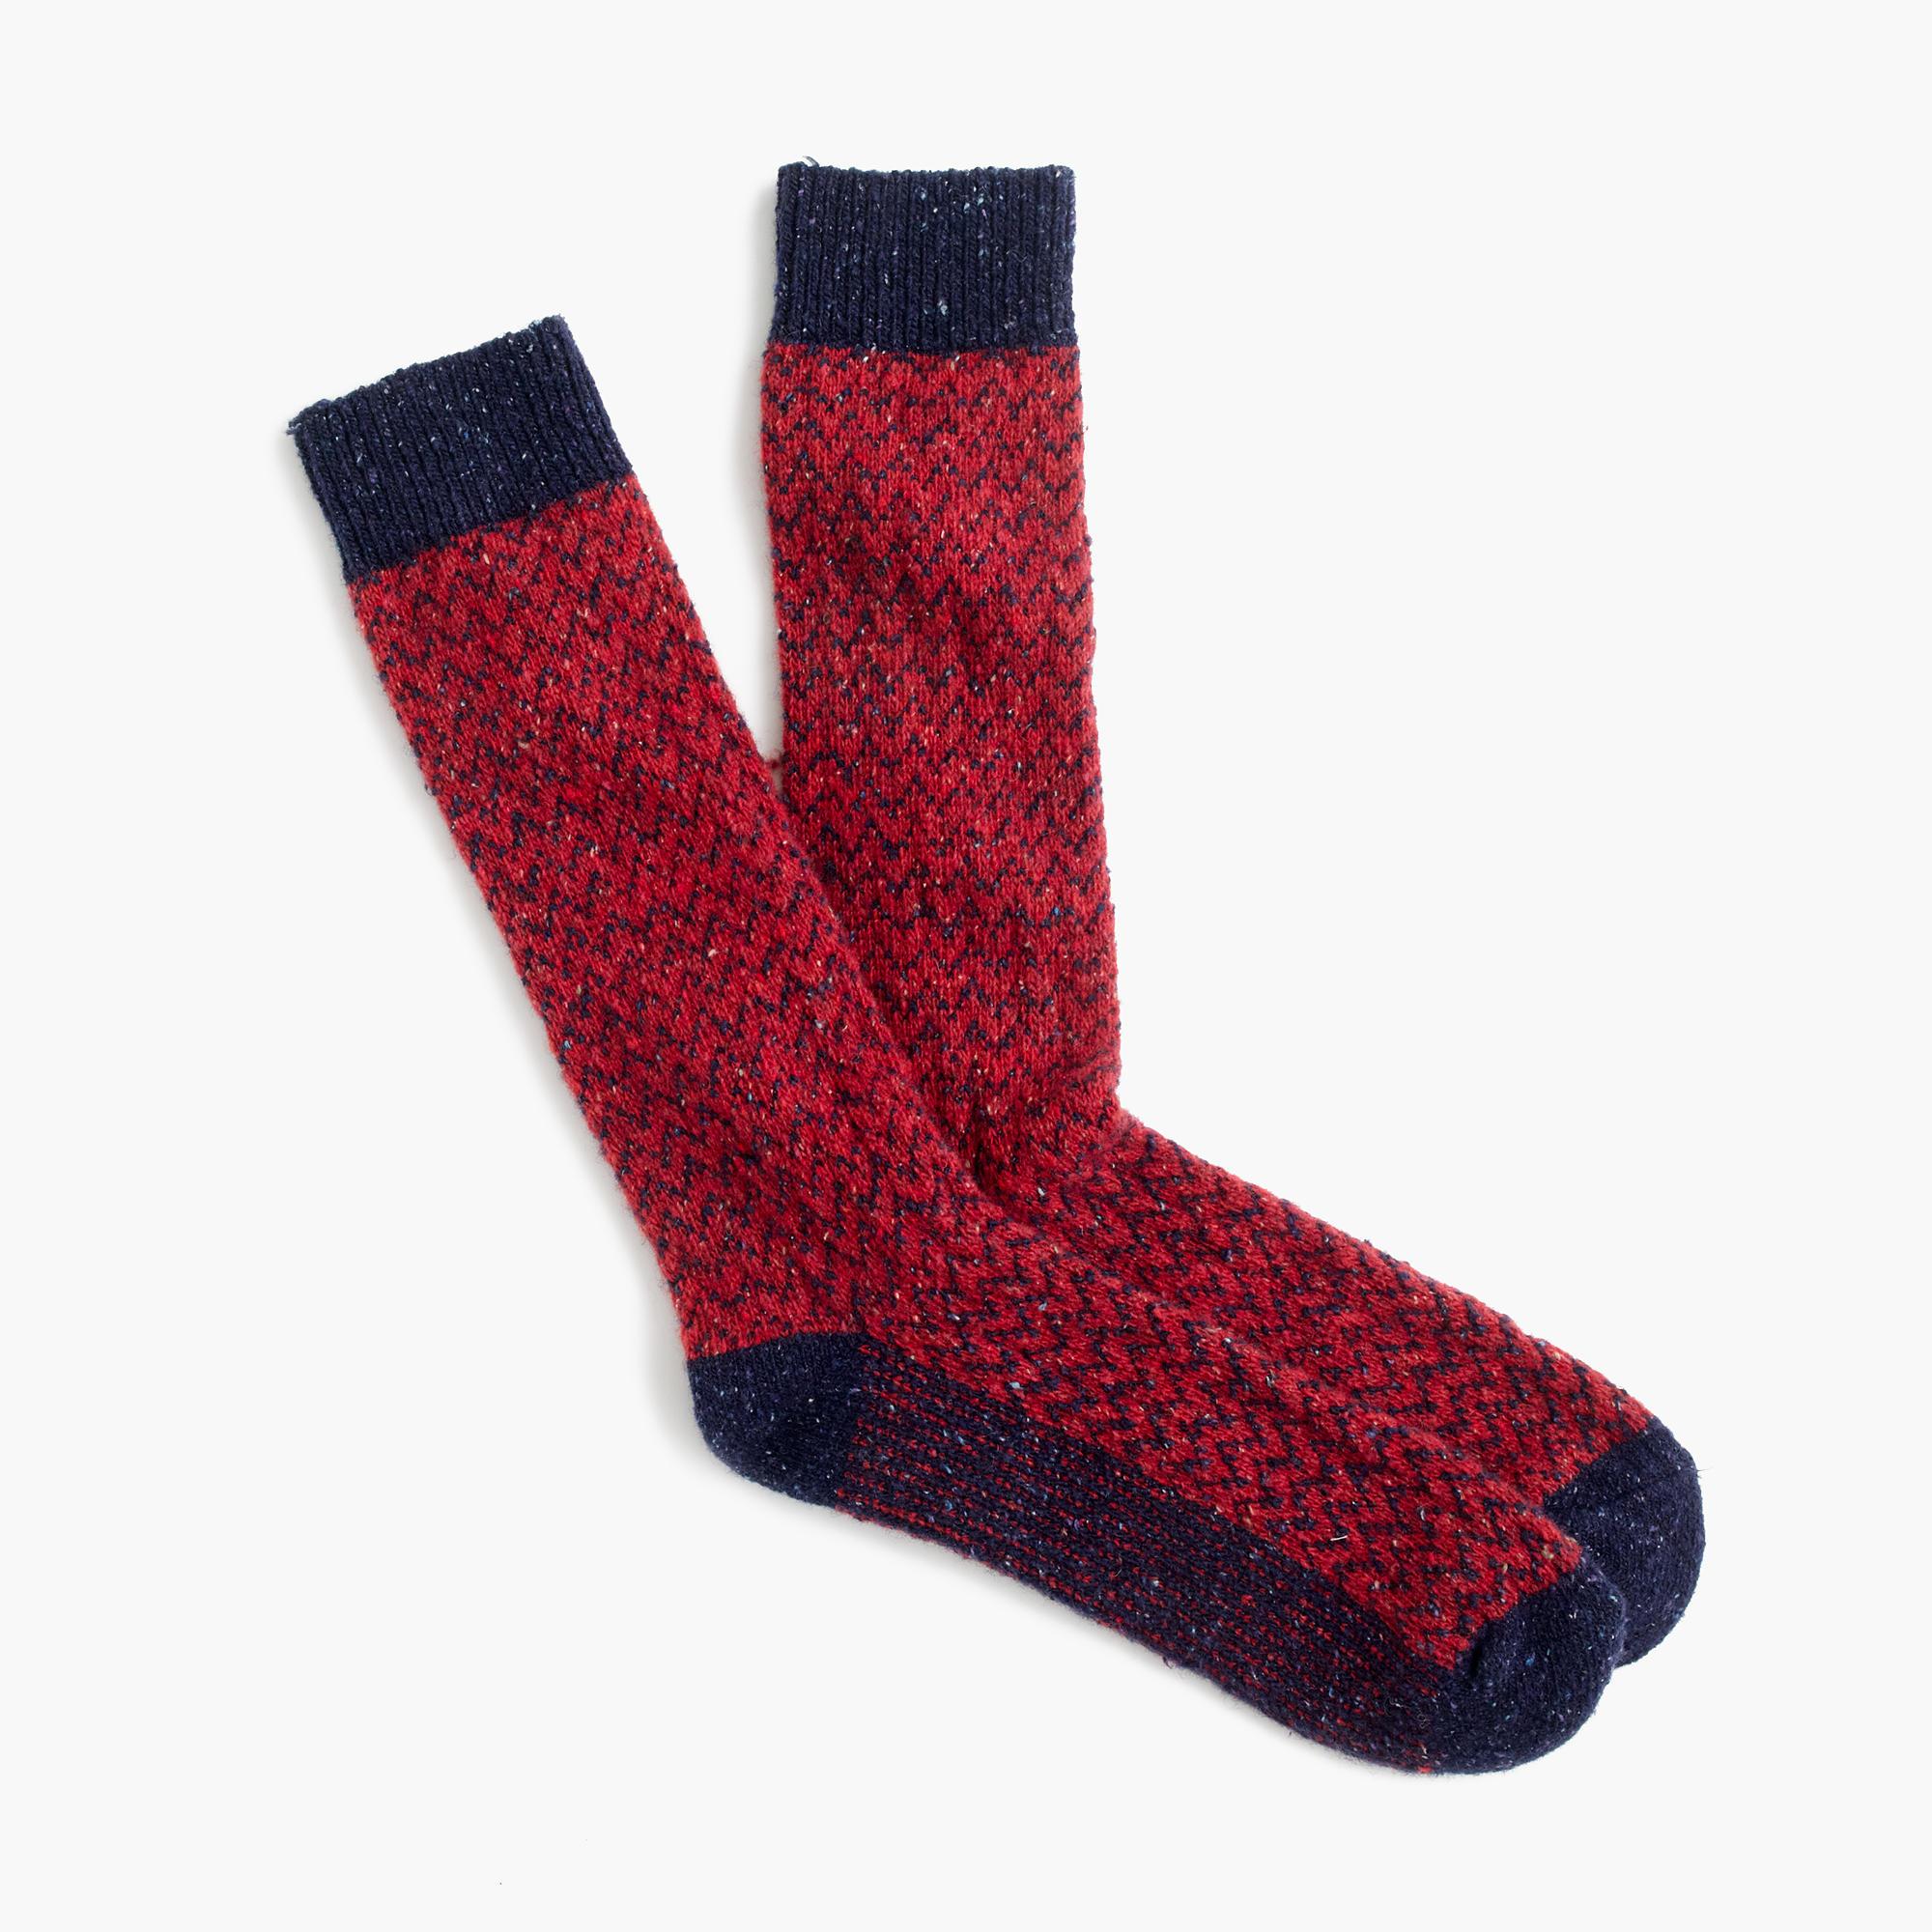 J.Crew Donegal Wool Herringbone Socks in Red for Men - Lyst